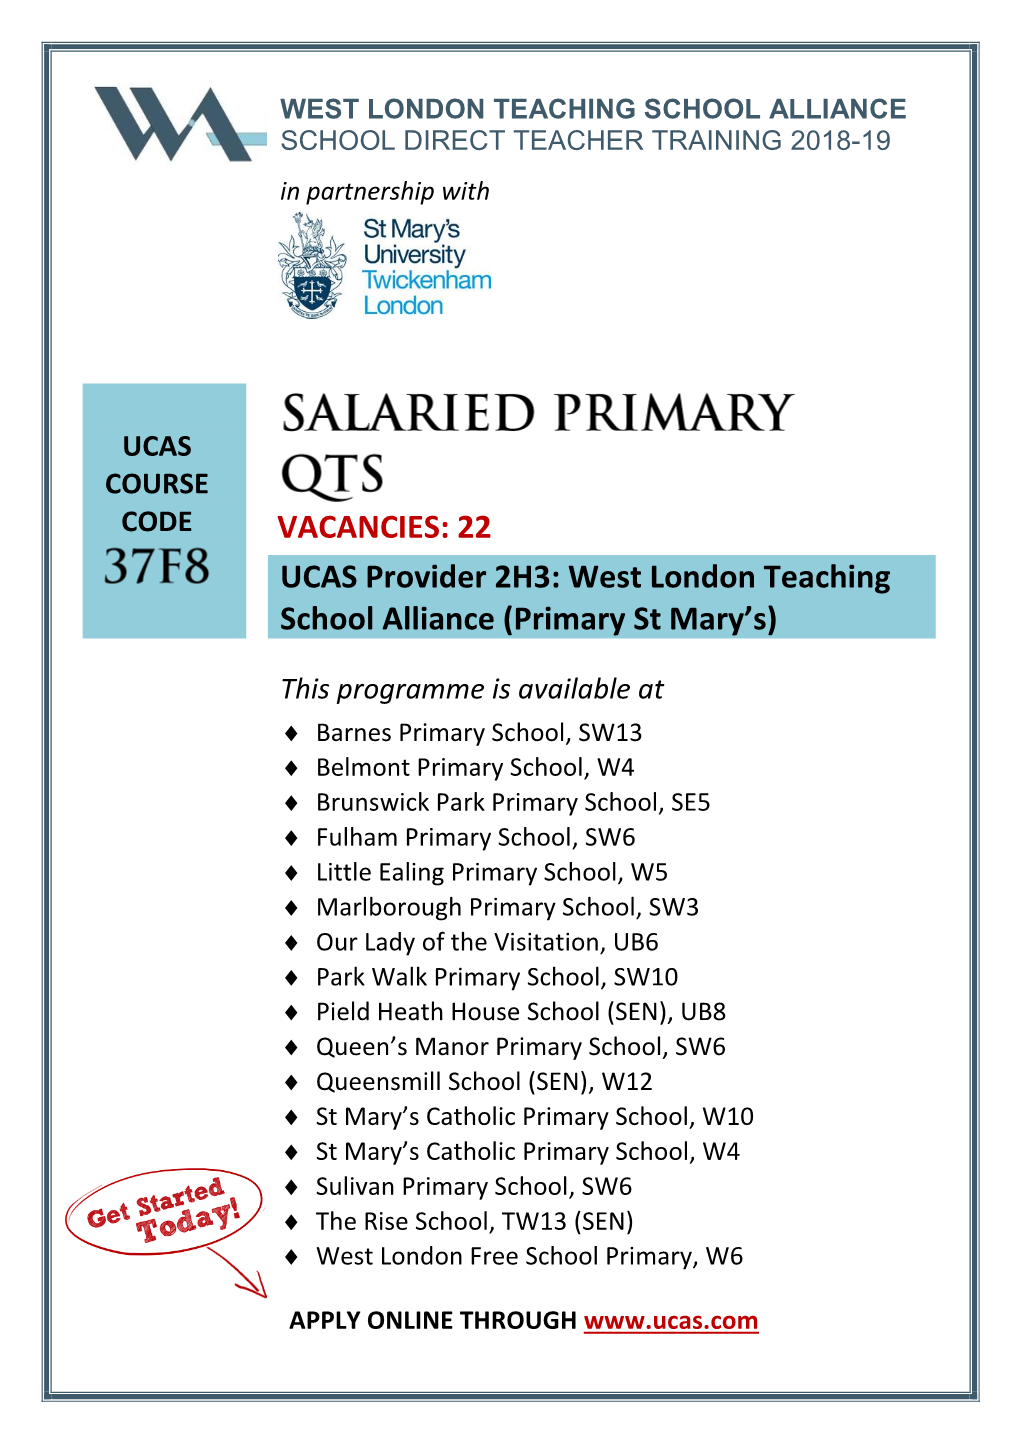 West London Teaching School Alliance School Direct Teacher Training 2018-19